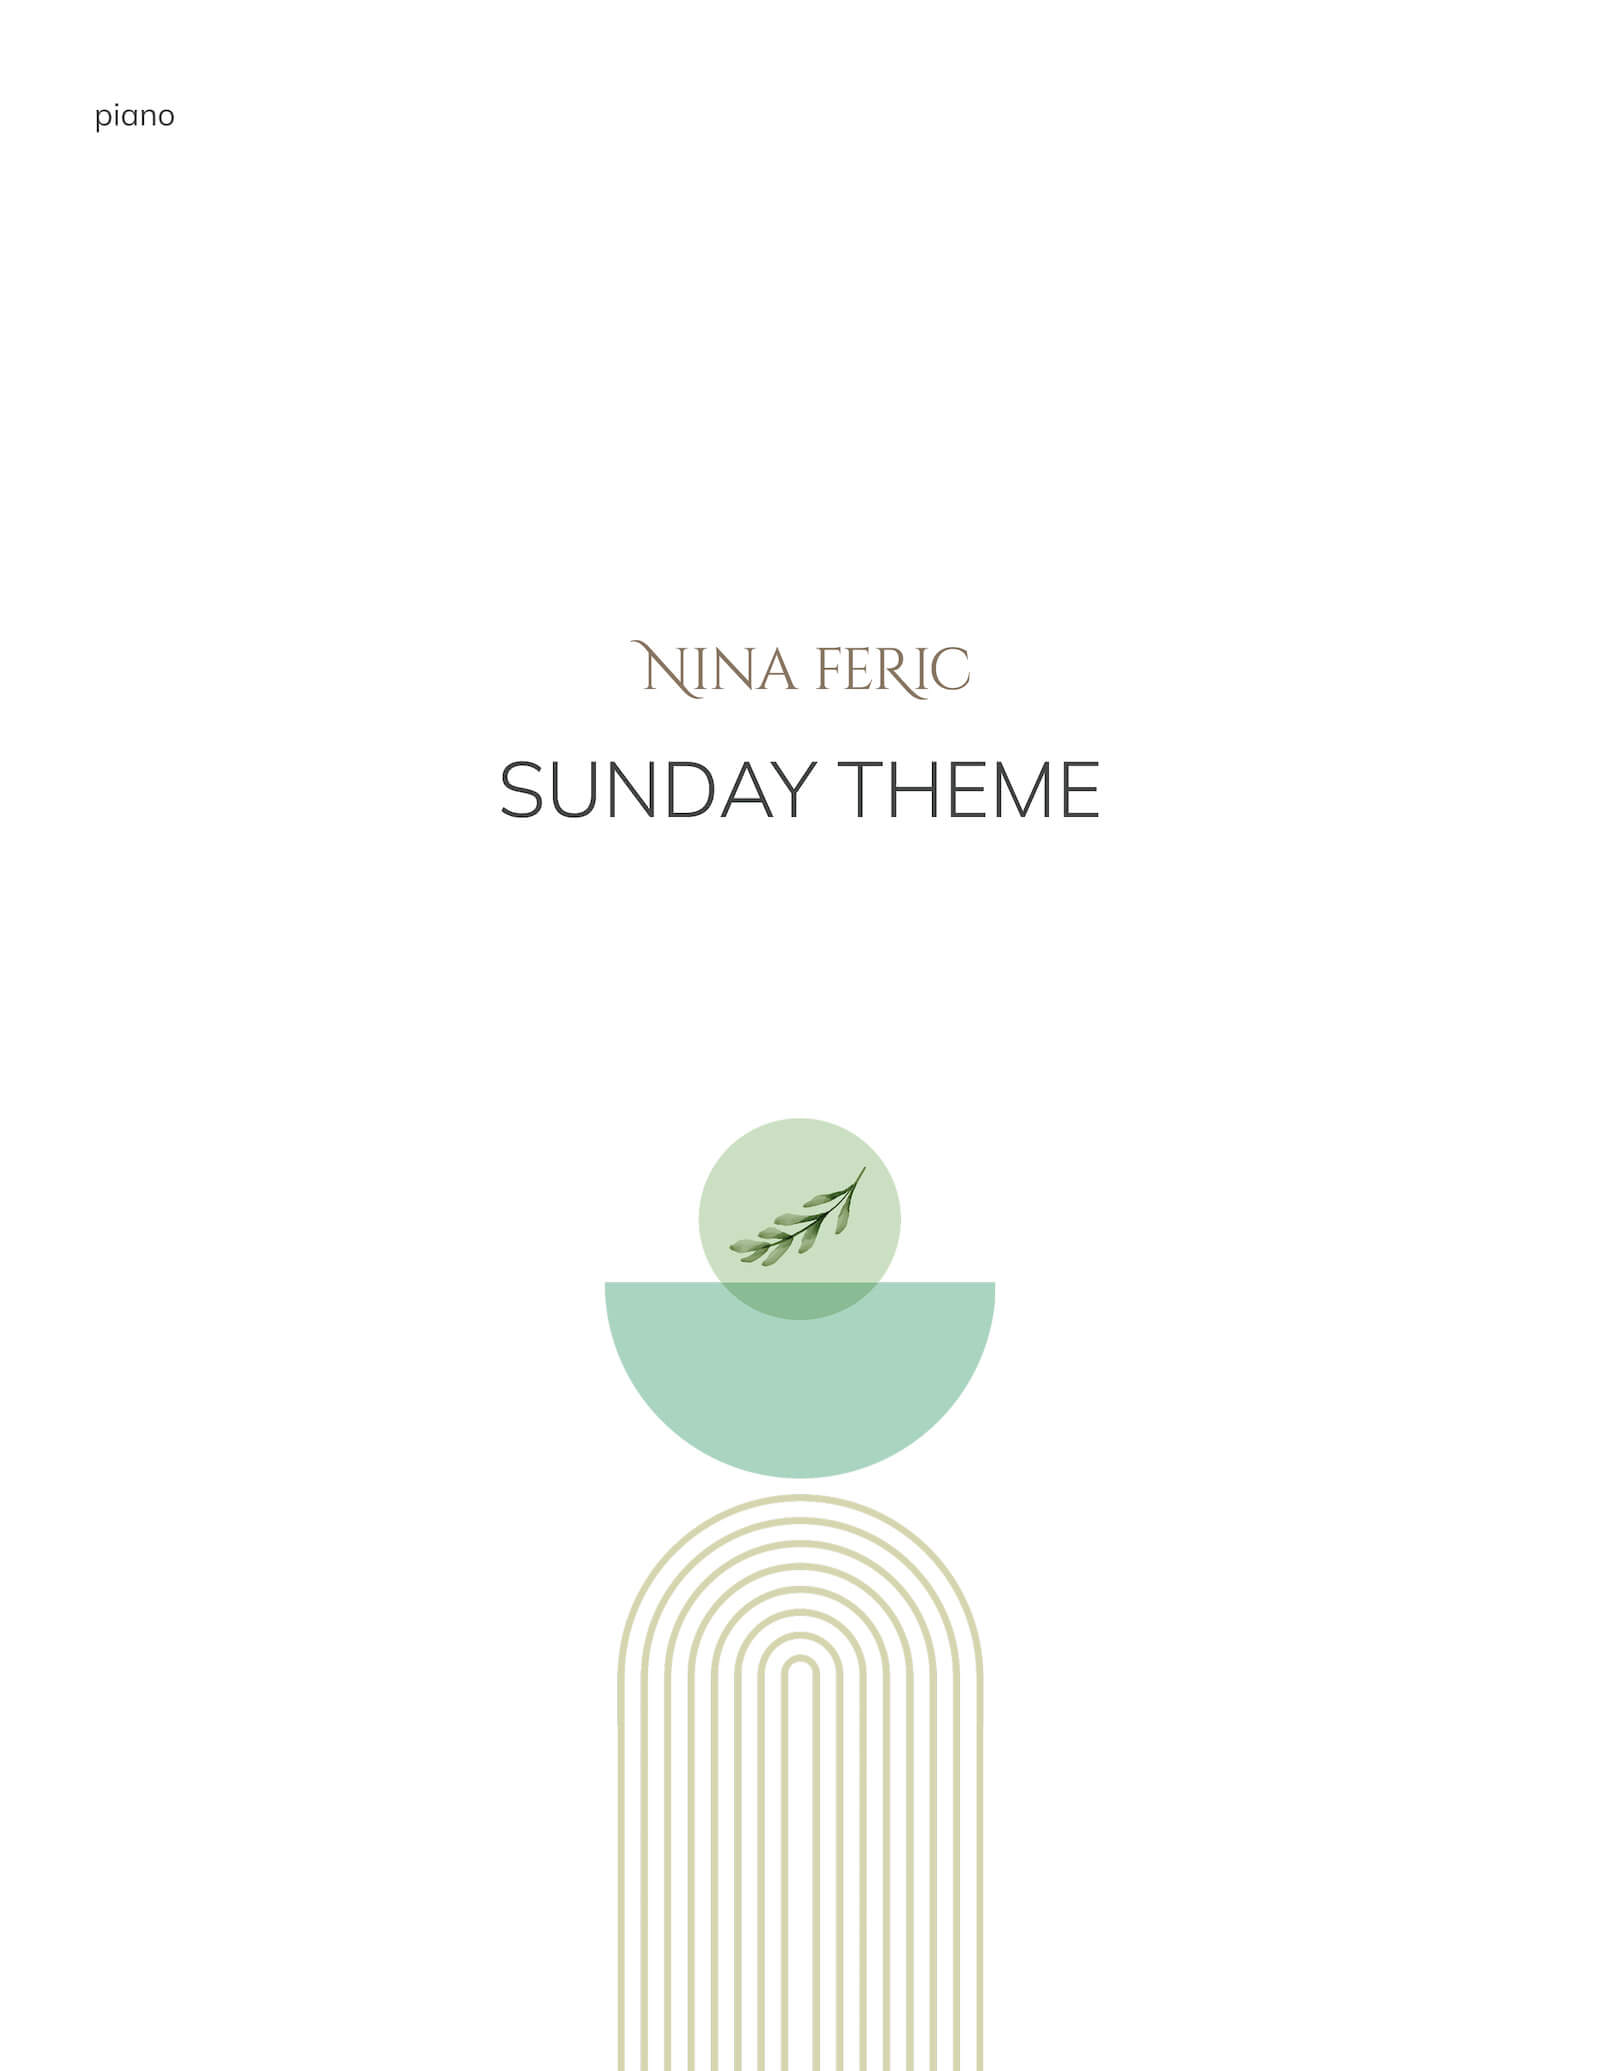 Sunday Theme - score cover